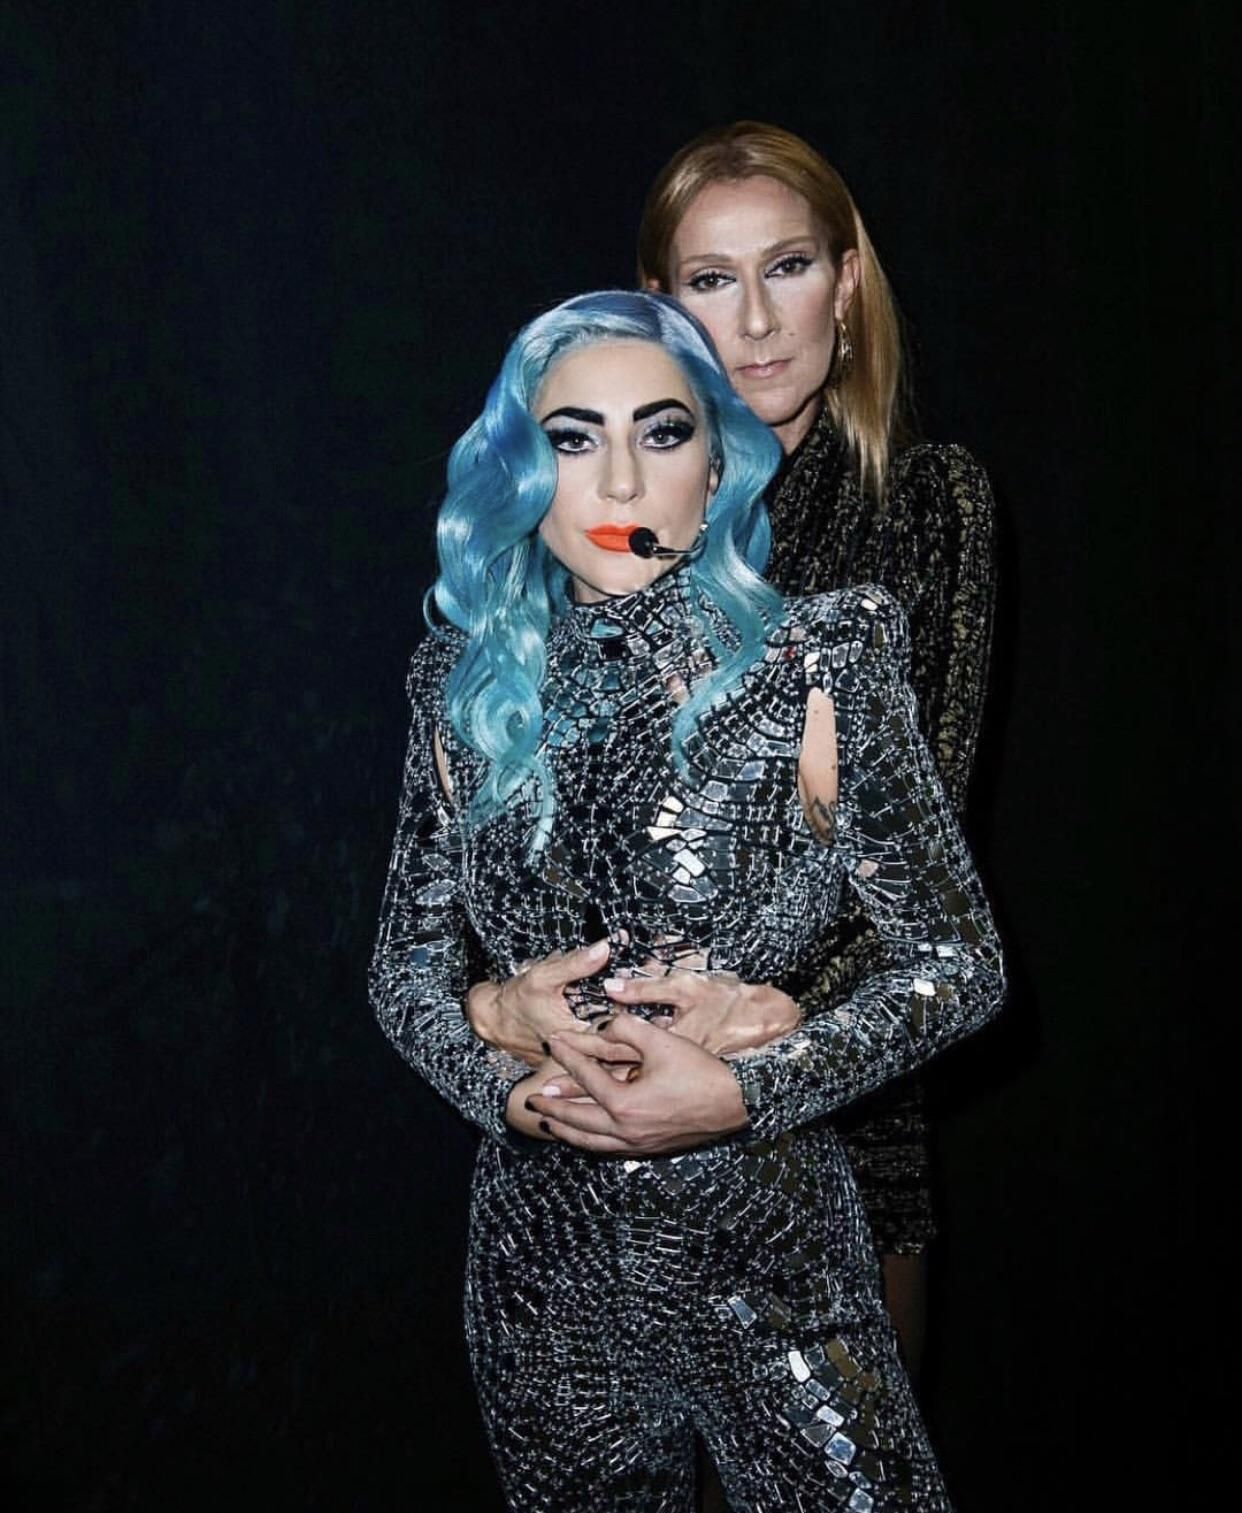 Céline Dion & Lady Gaga Look Like The Newest Contestants On Ru Paul’s Drag Race